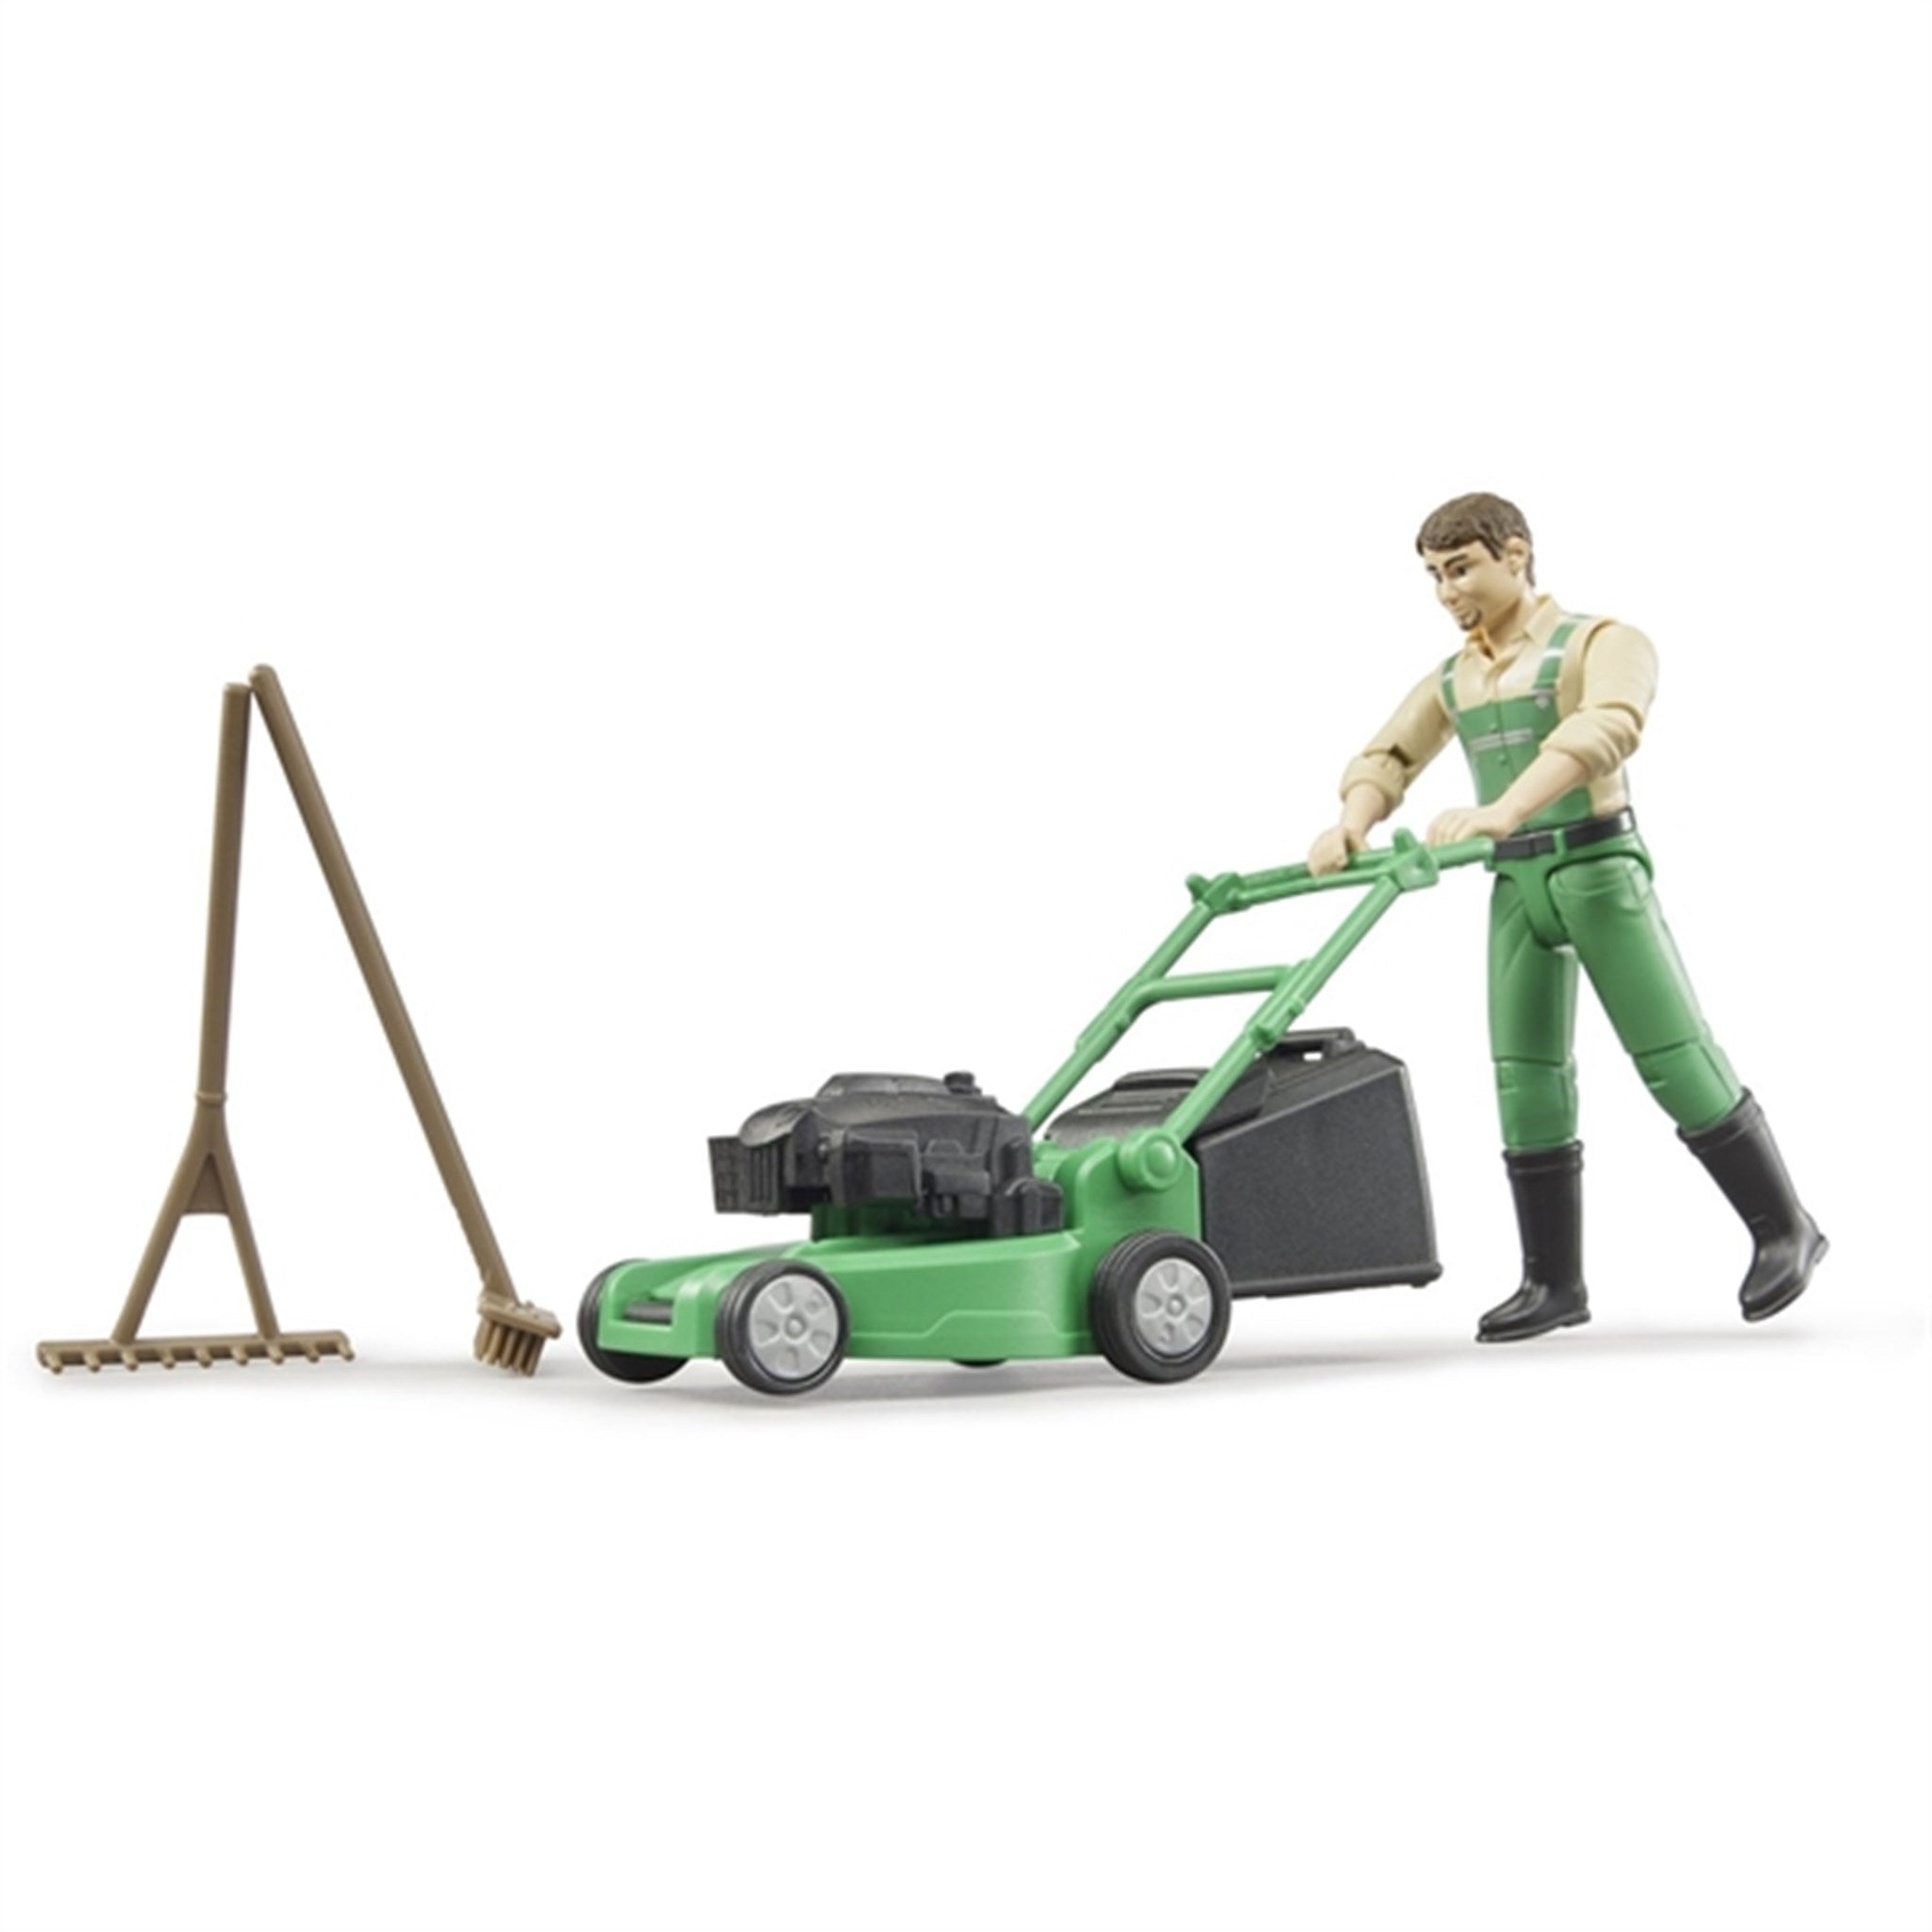 Bruder Bworld Gardener with Lawn Mower and Equipment